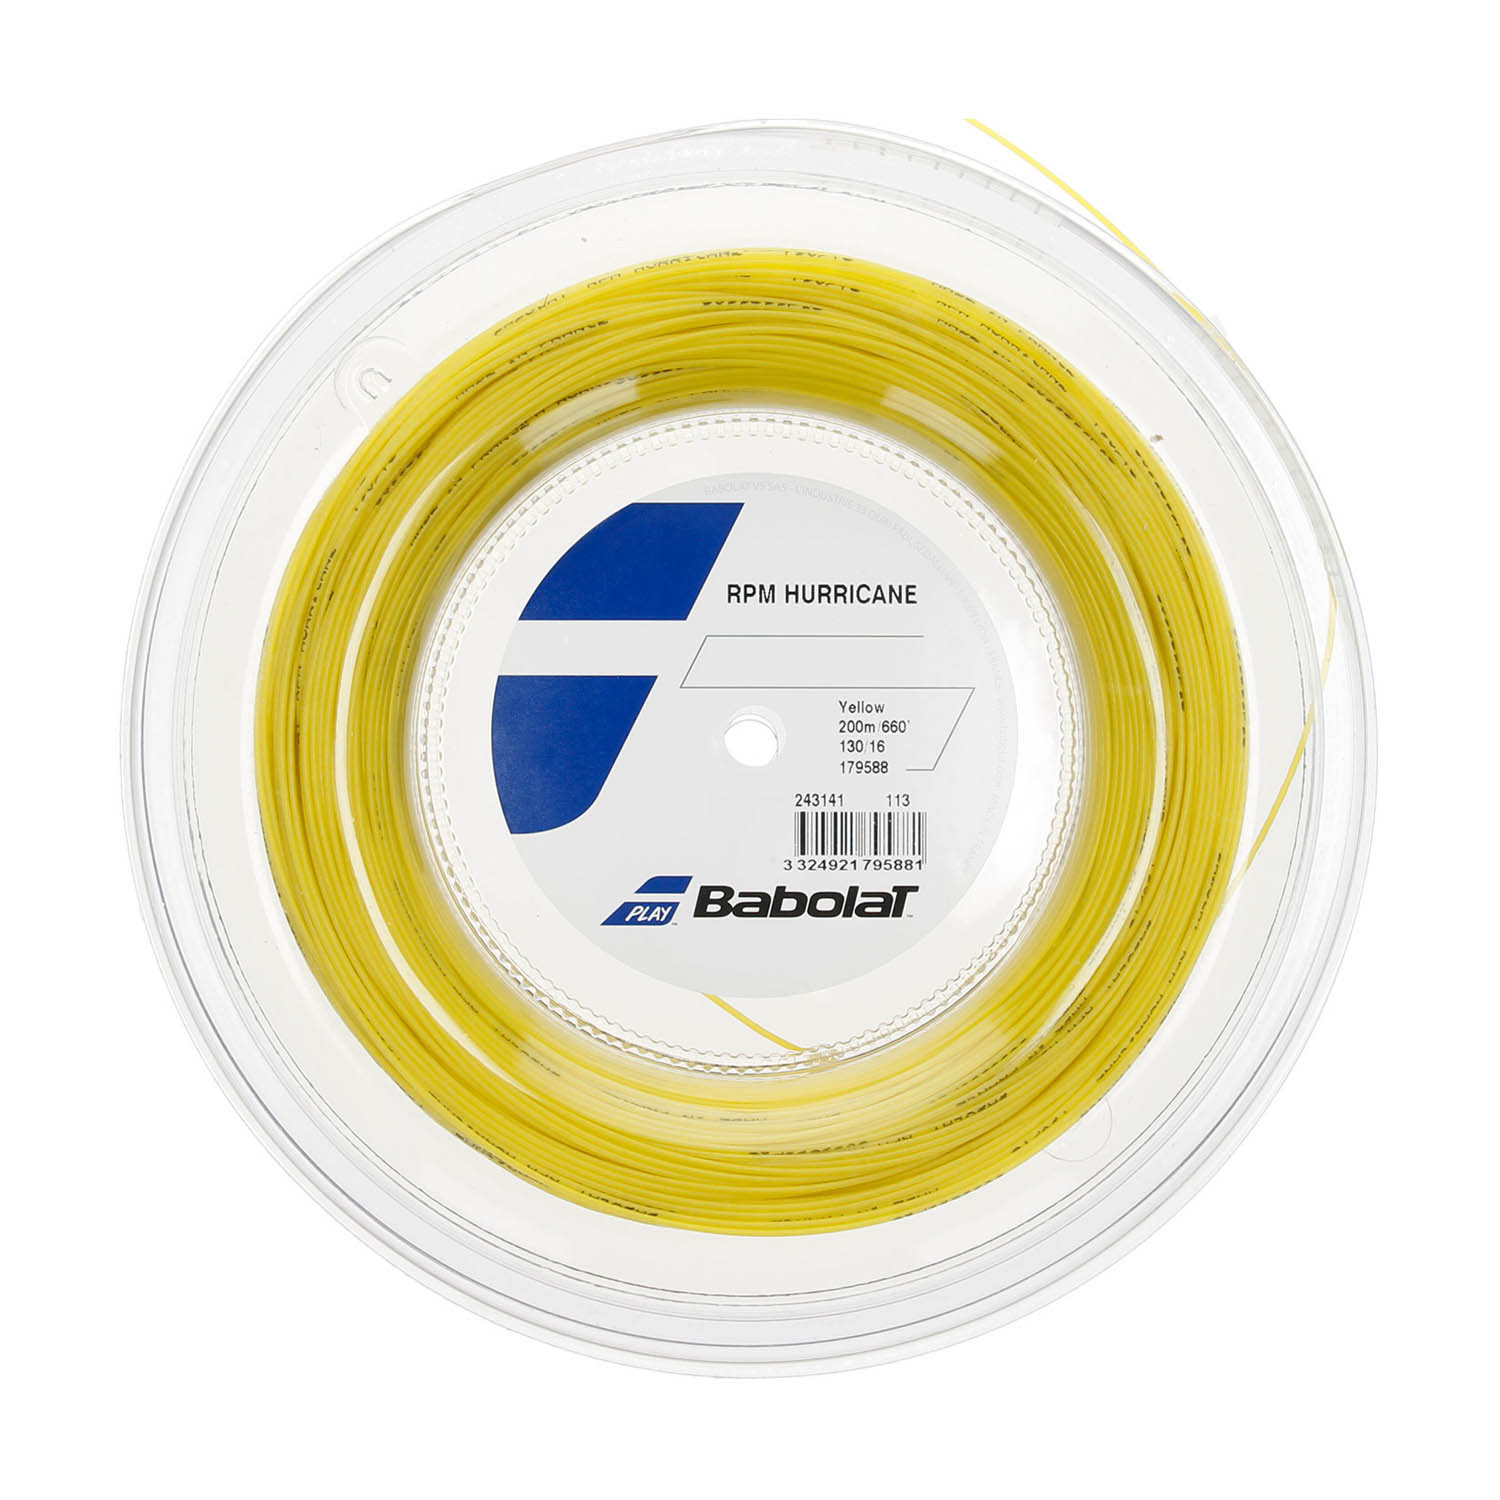 Babolat RPM Hurricane 1.30 200 m String Reel - Yellow